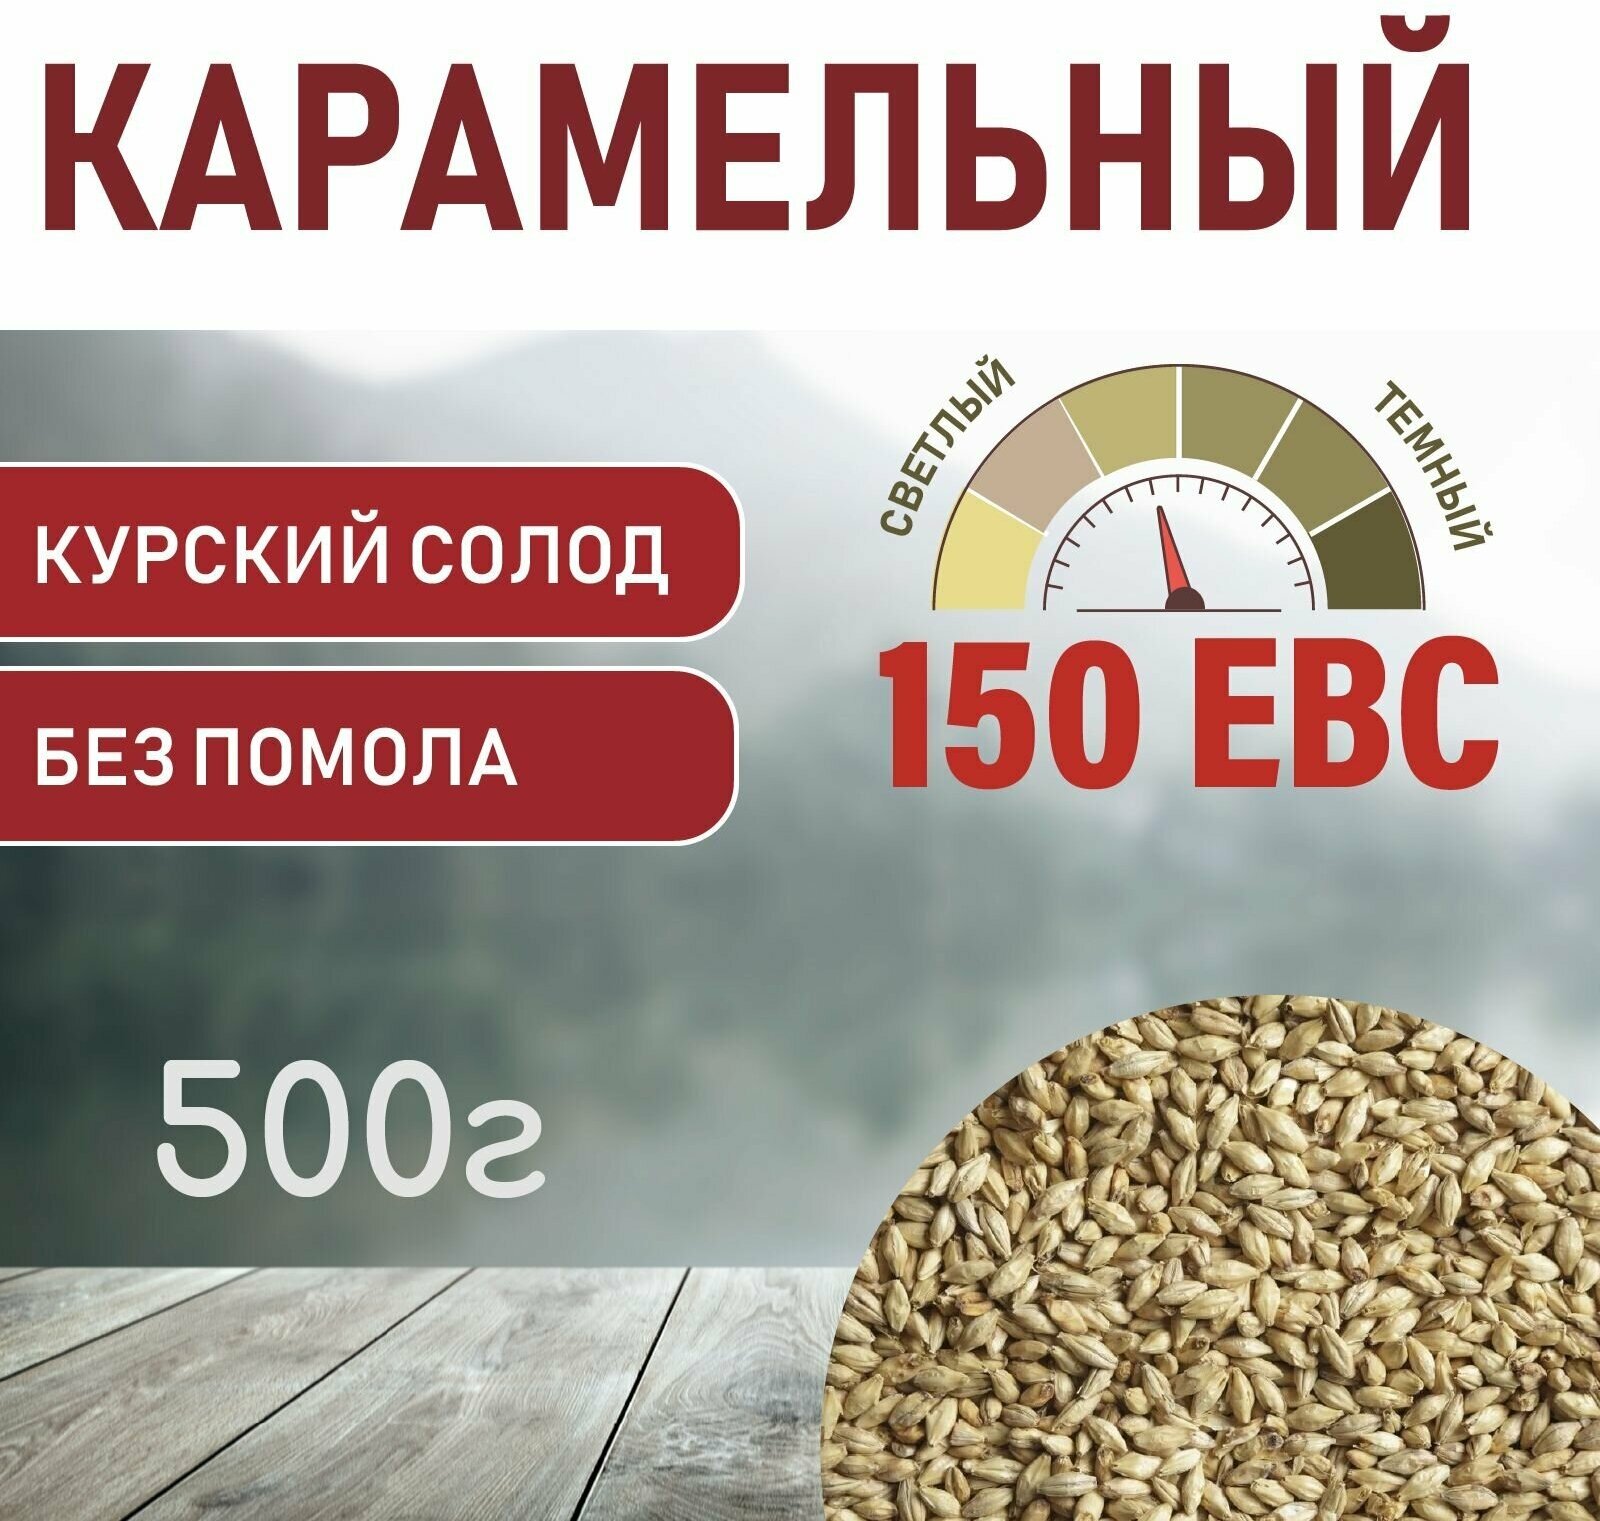 Солод Карамельный EBS 150 (Курский солод) 500гр.